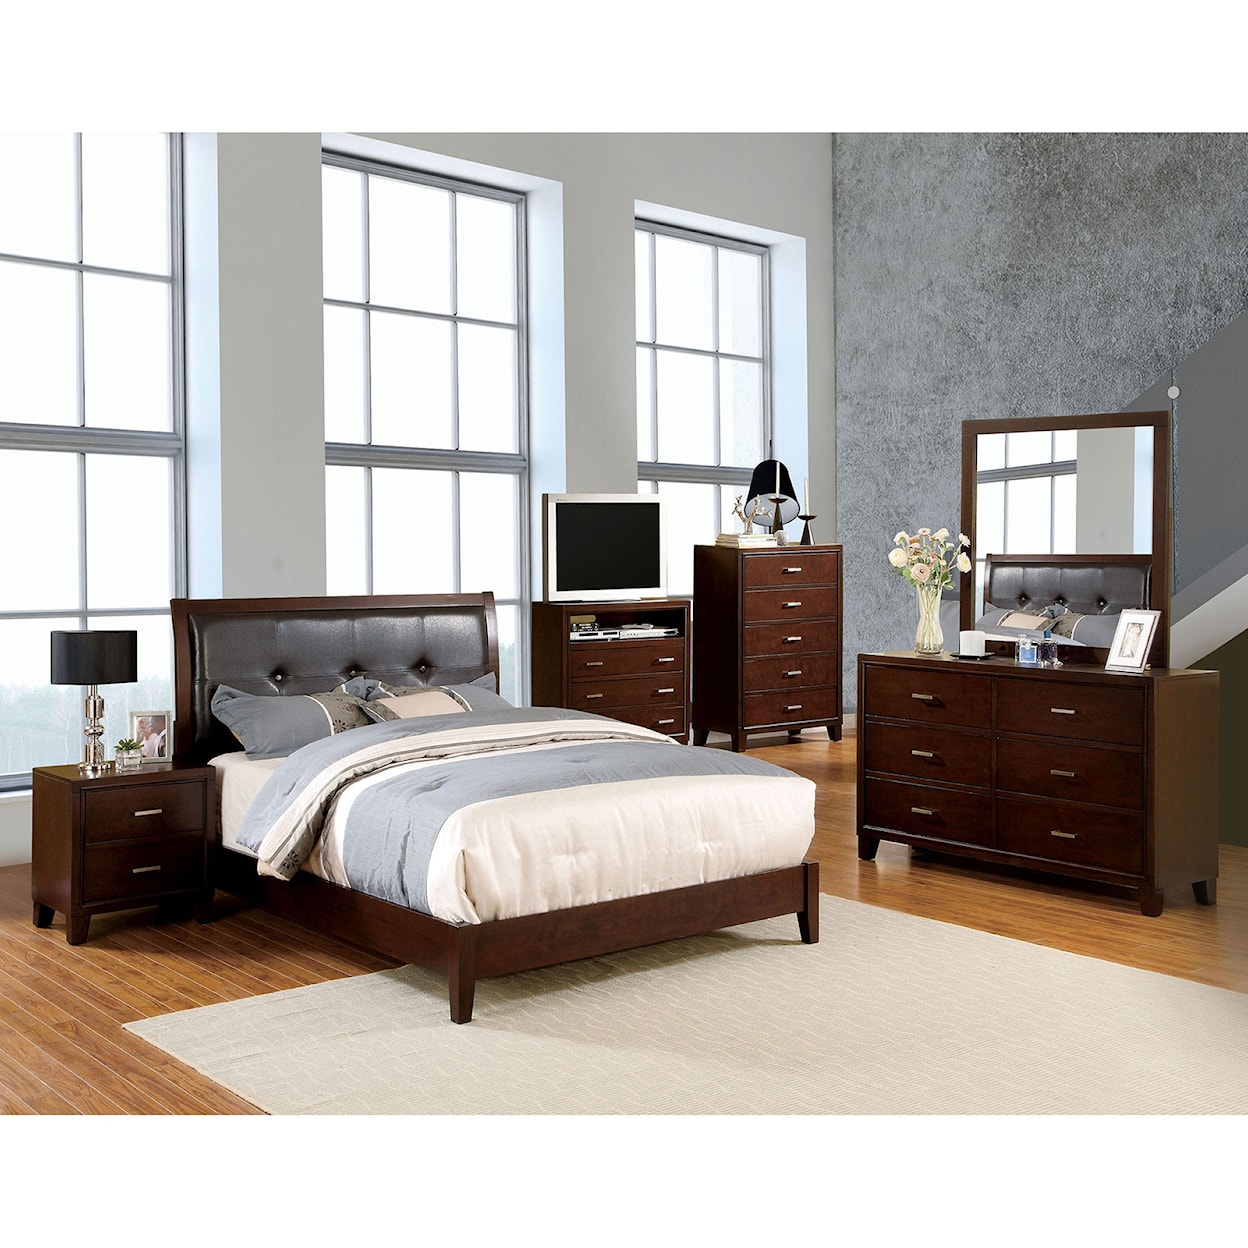 Furniture of America Enrico 5 Piece Queen Bedroom Set